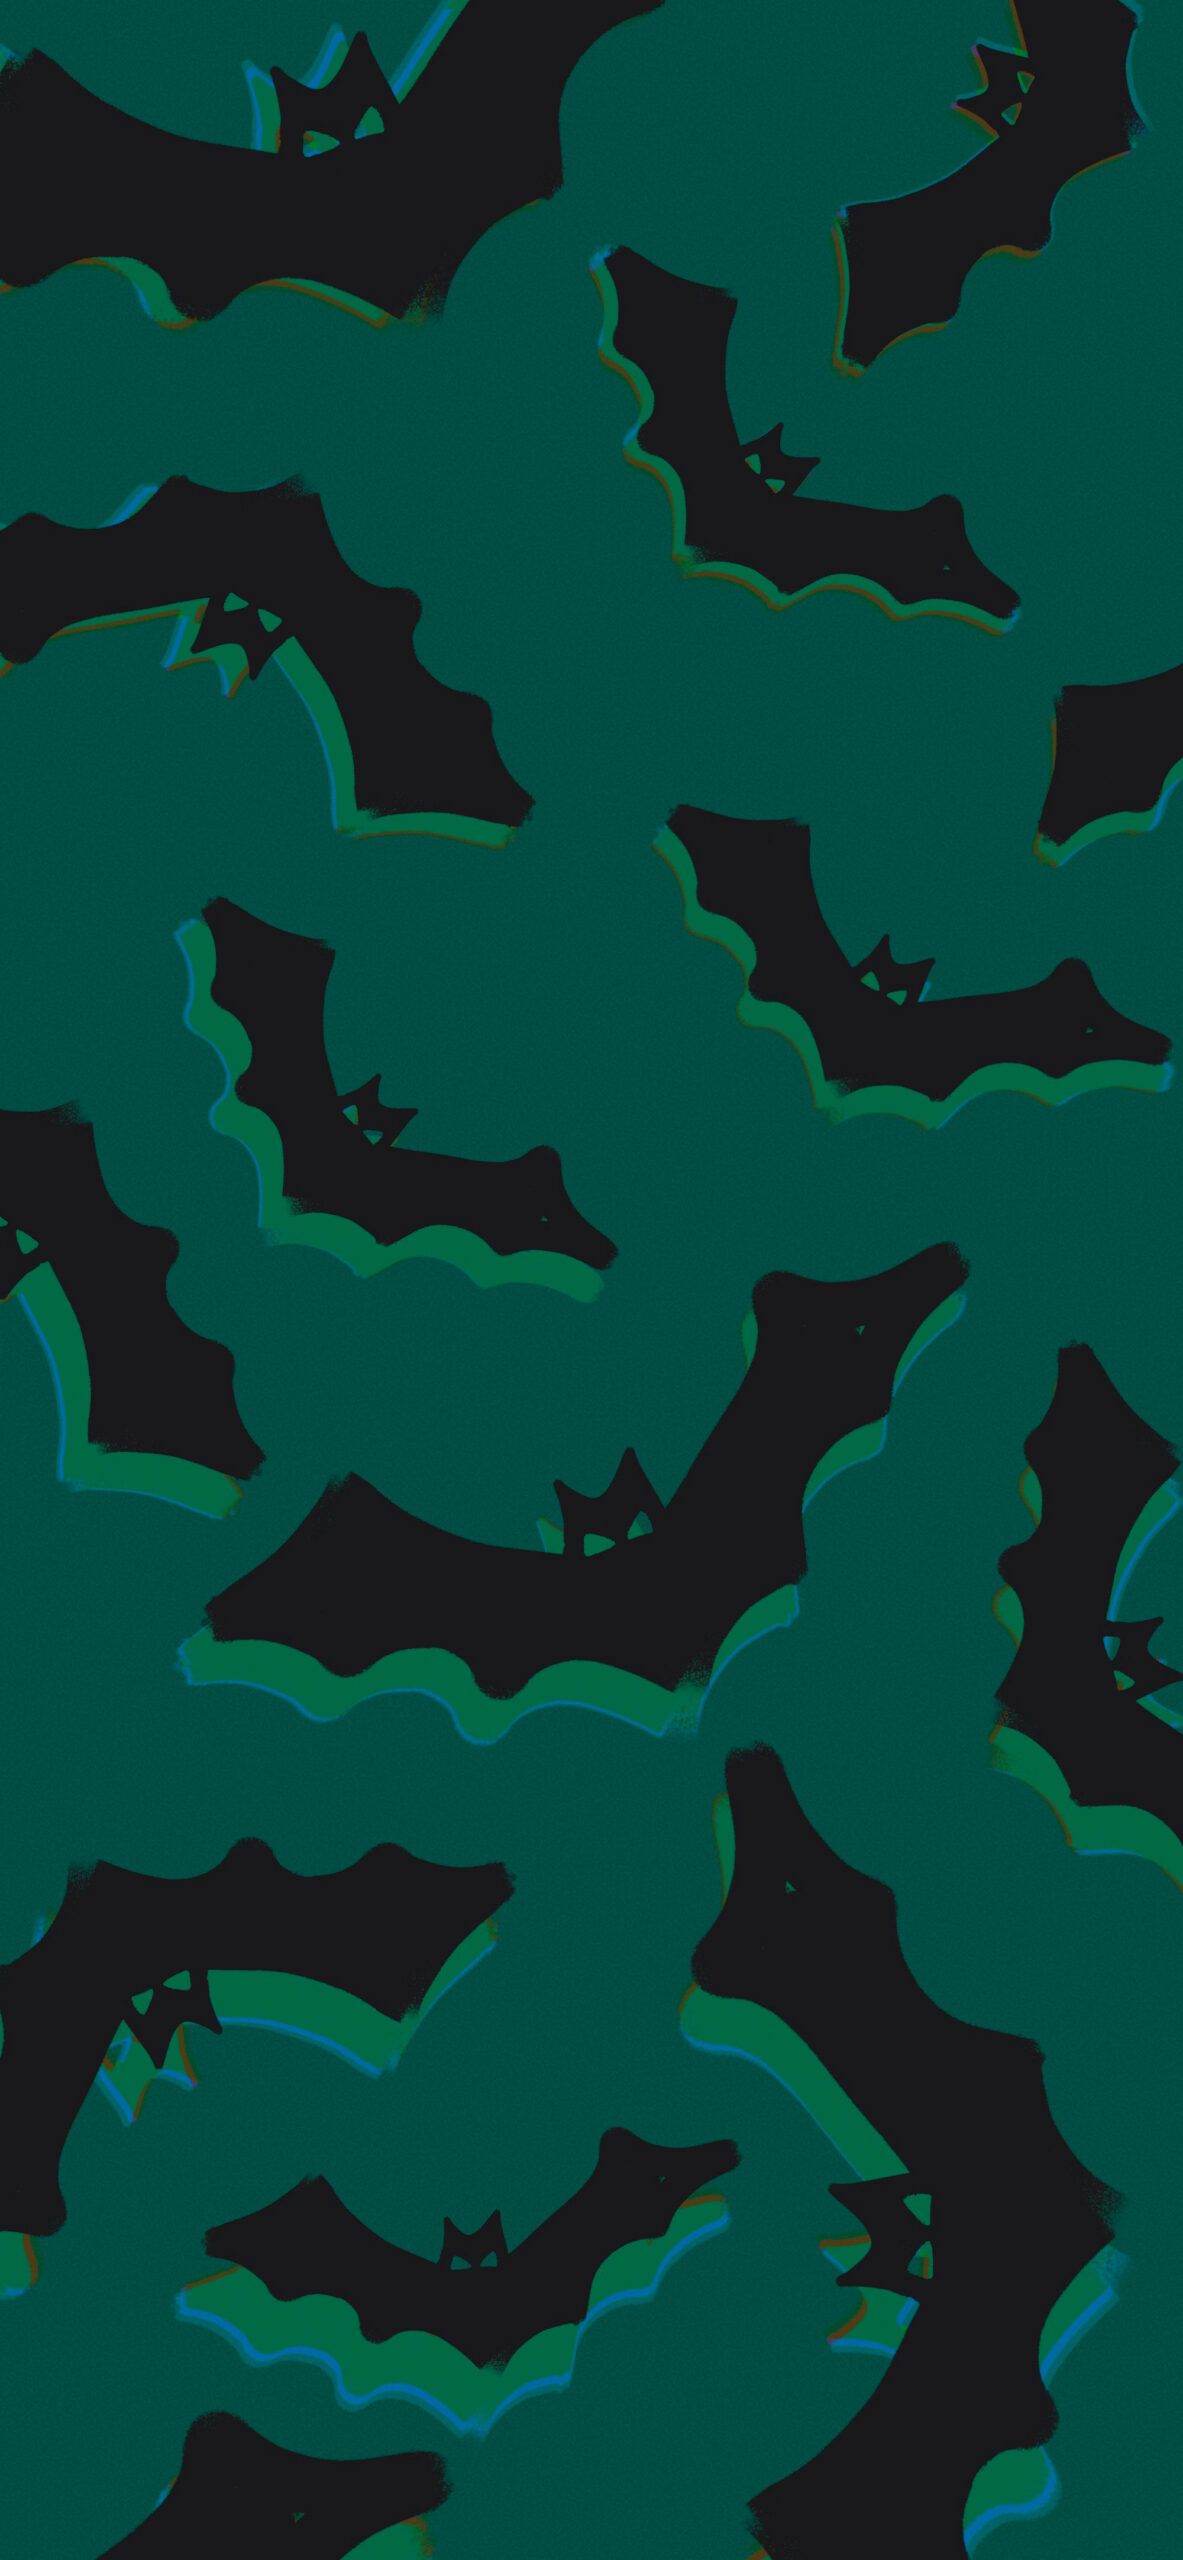 A pattern of black bats on green background - Halloween